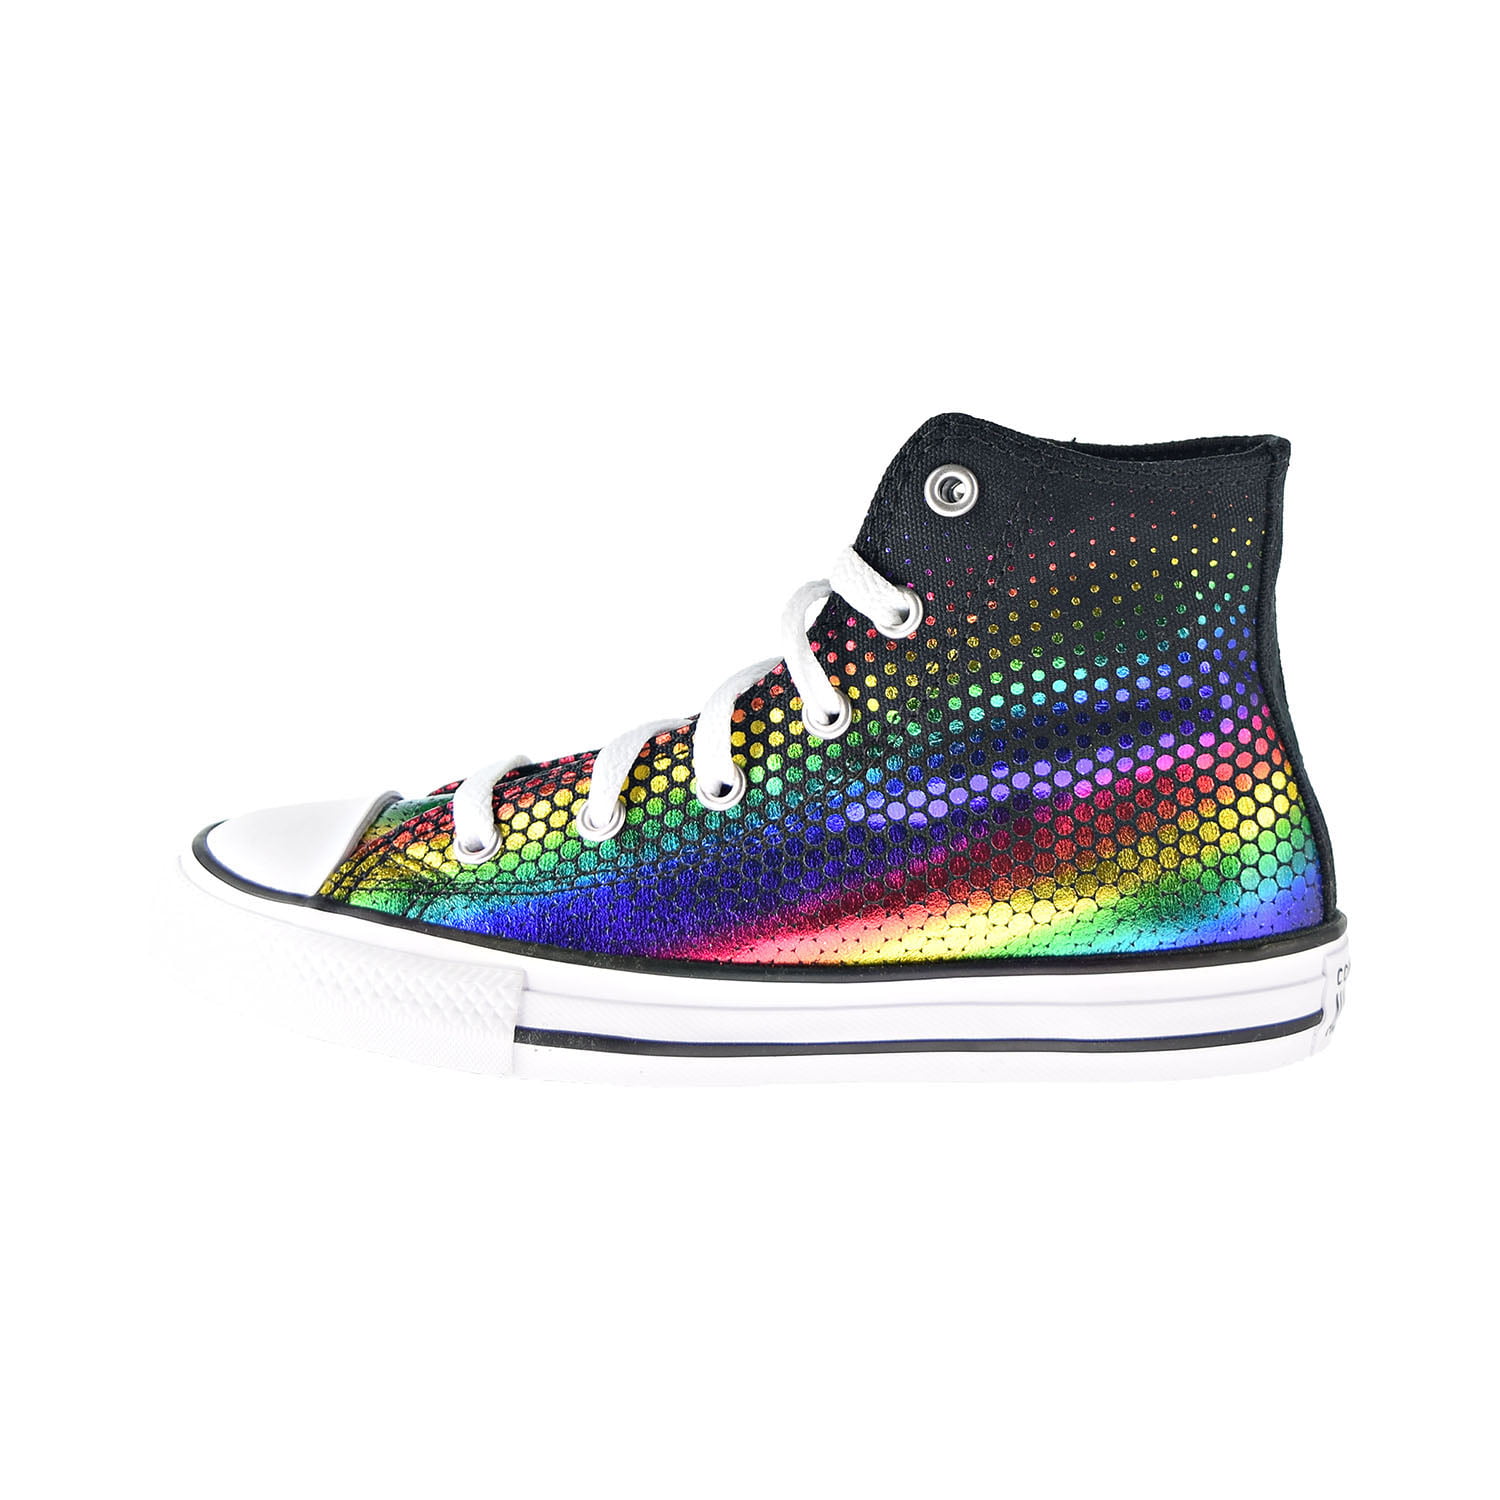 Converse Chuck Taylor AS Hi Rainbow Foil Little Kids' Shoes Black-Multi-White  366307f 